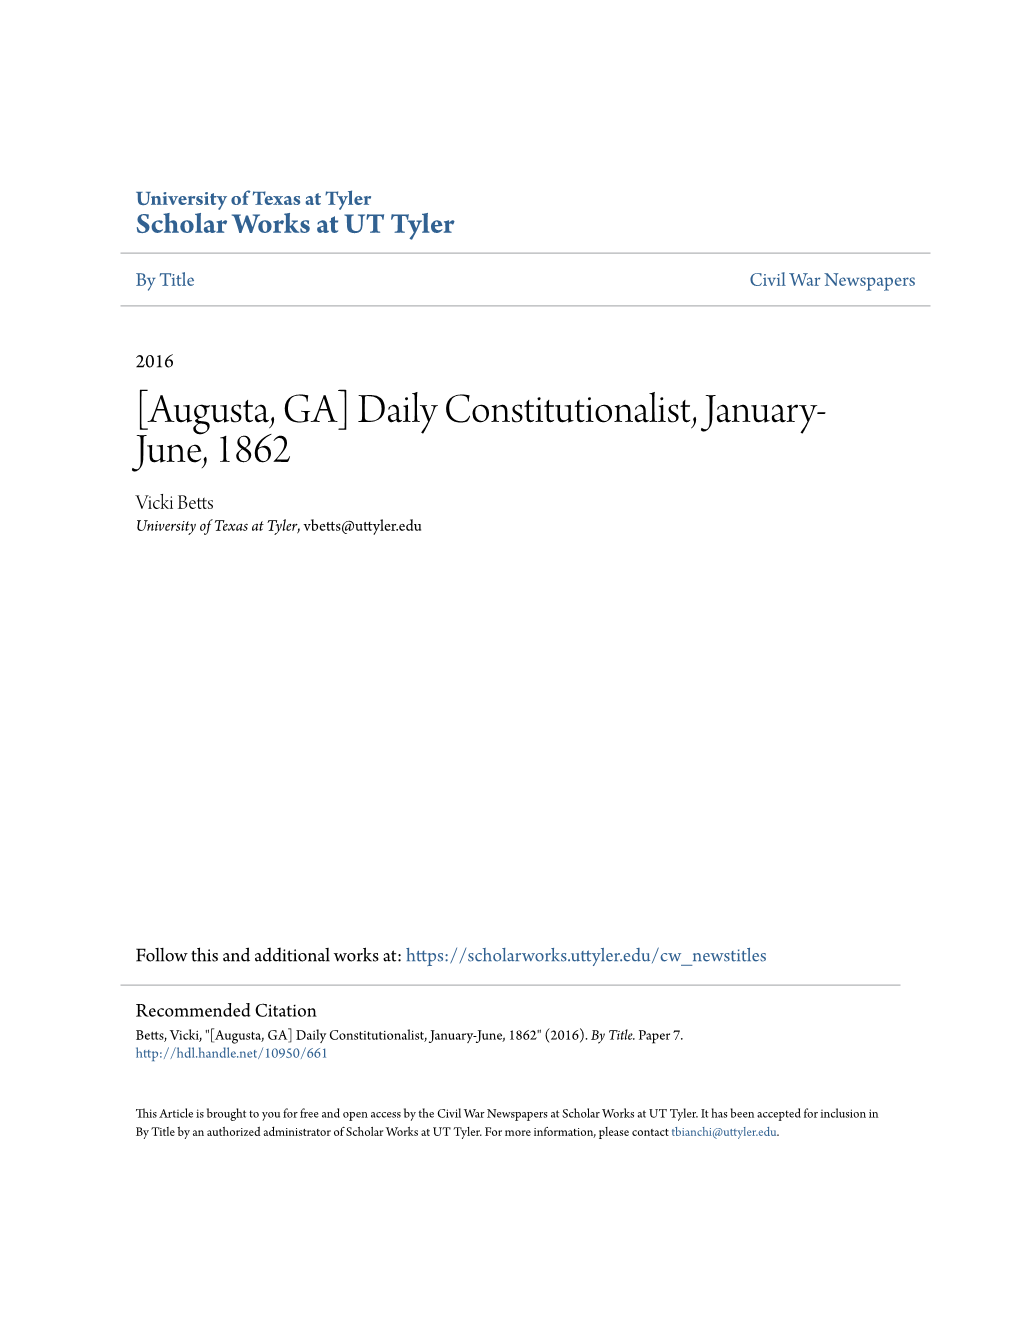 Augusta, GA] Daily Constitutionalist, January- June, 1862 Vicki Betts University of Texas at Tyler, Vbetts@Uttyler.Edu